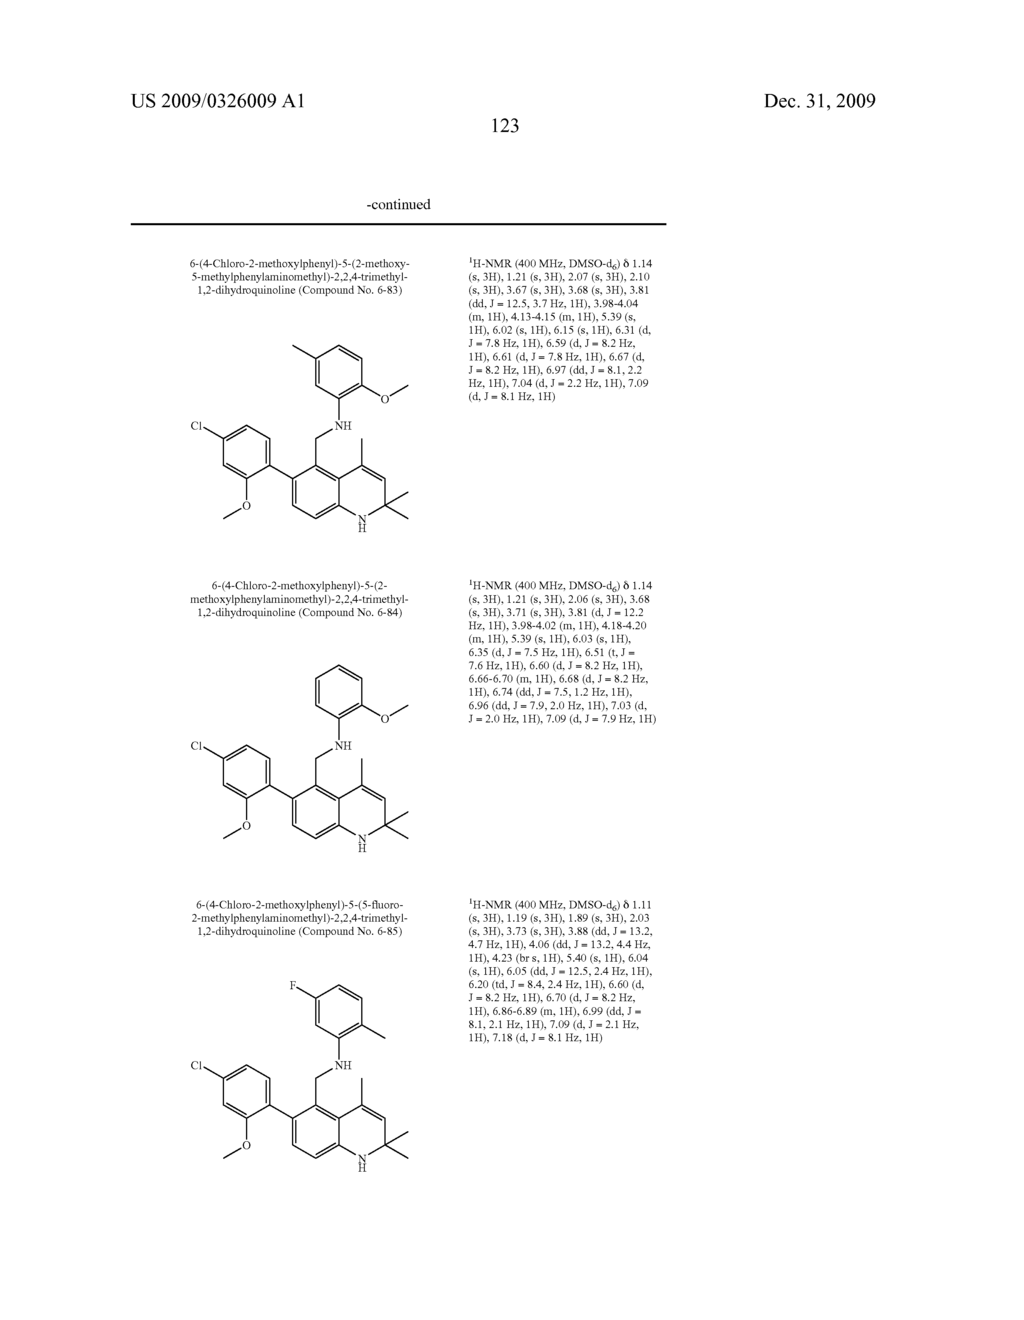 Novel 1-2-Dihydroquinoline Derivative Having Glucocorticoid Receptor Binding Activity - diagram, schematic, and image 124